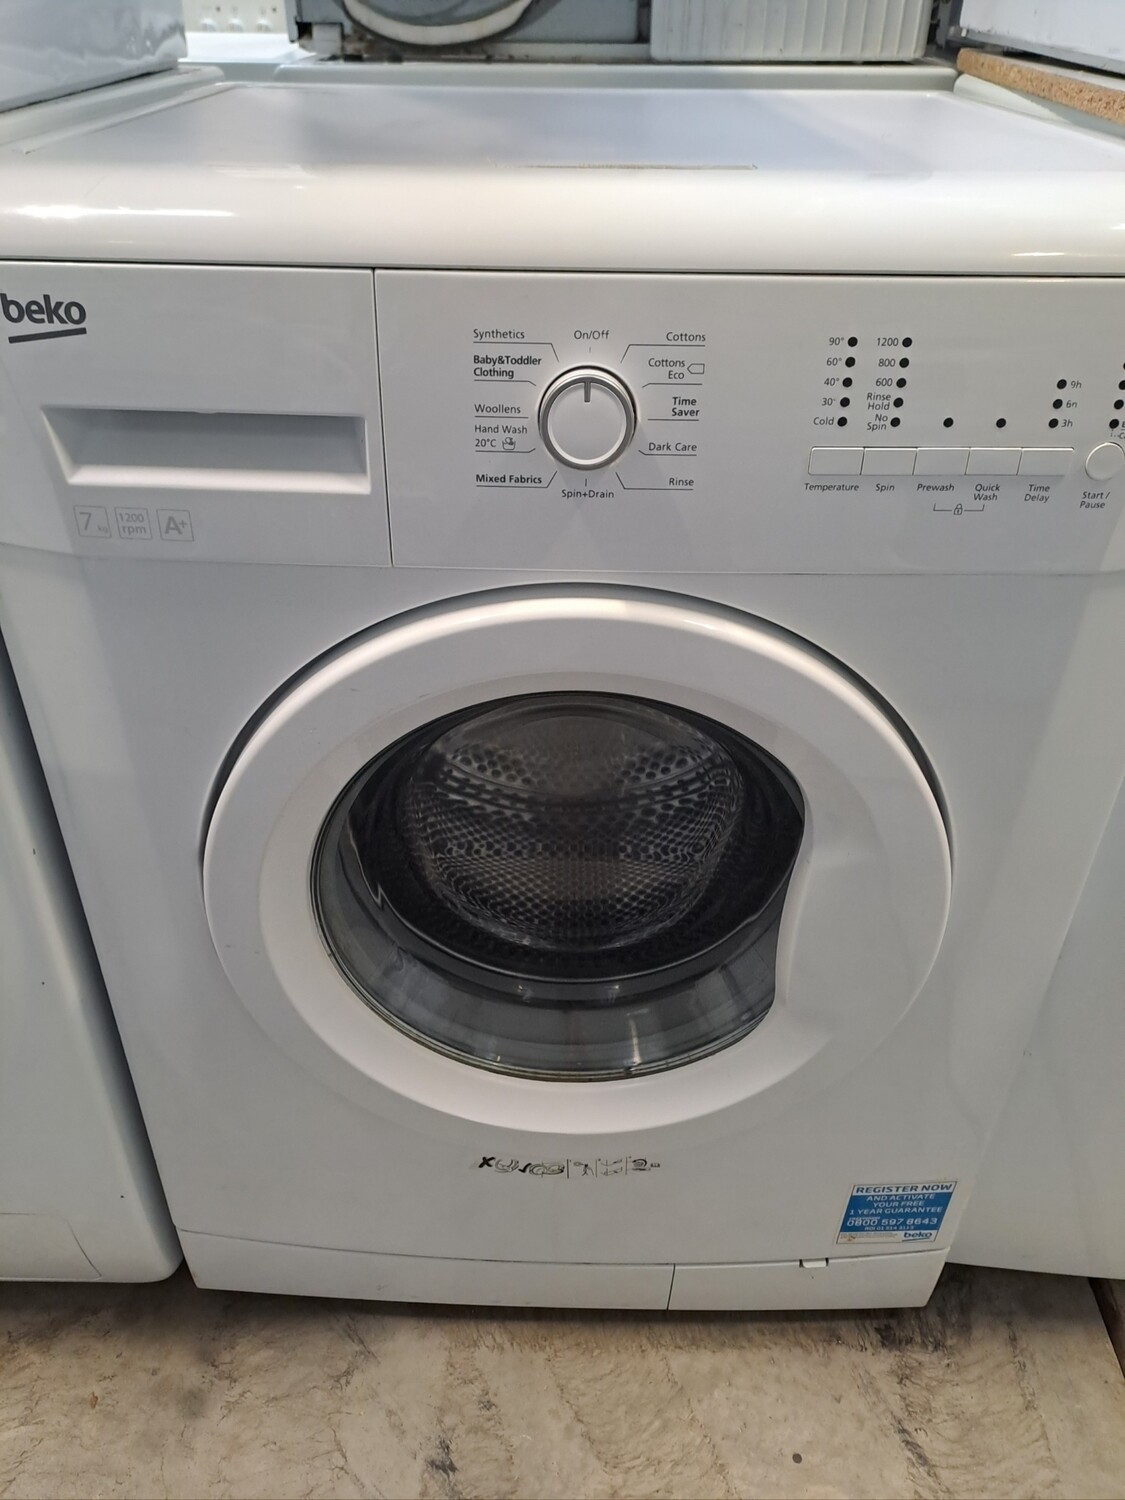 Beko WM7120W A+ 7kg Load, 1200 Spin Washing Machine - White - Refurbished - 6 Month Guarantee